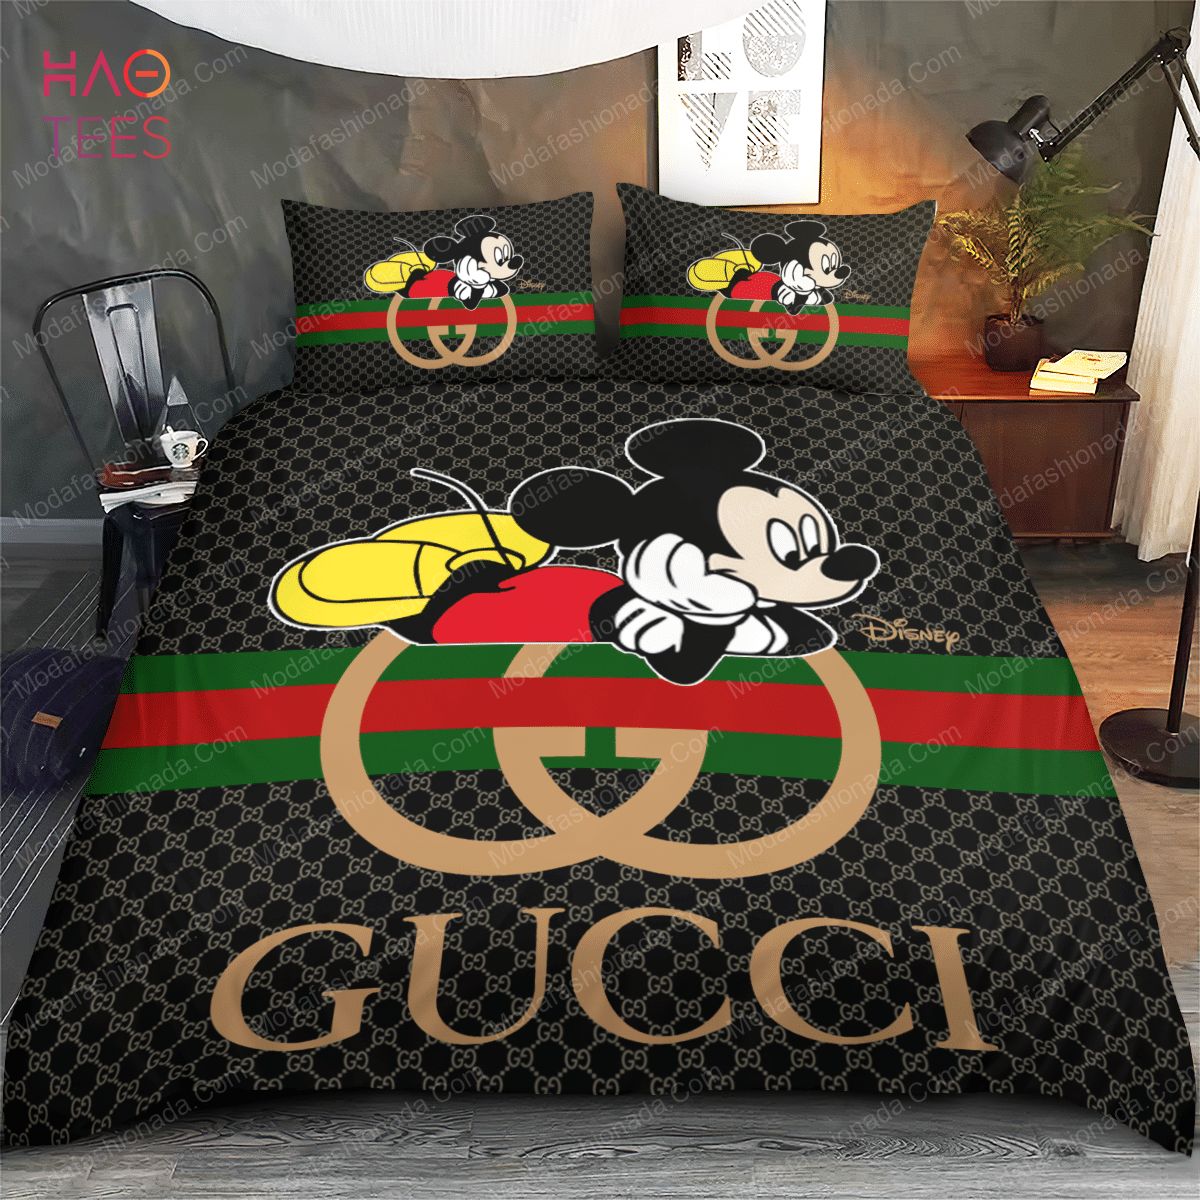 Pretty Gucci Fabrics and Mickey Fabrics for Brand Name Fashions